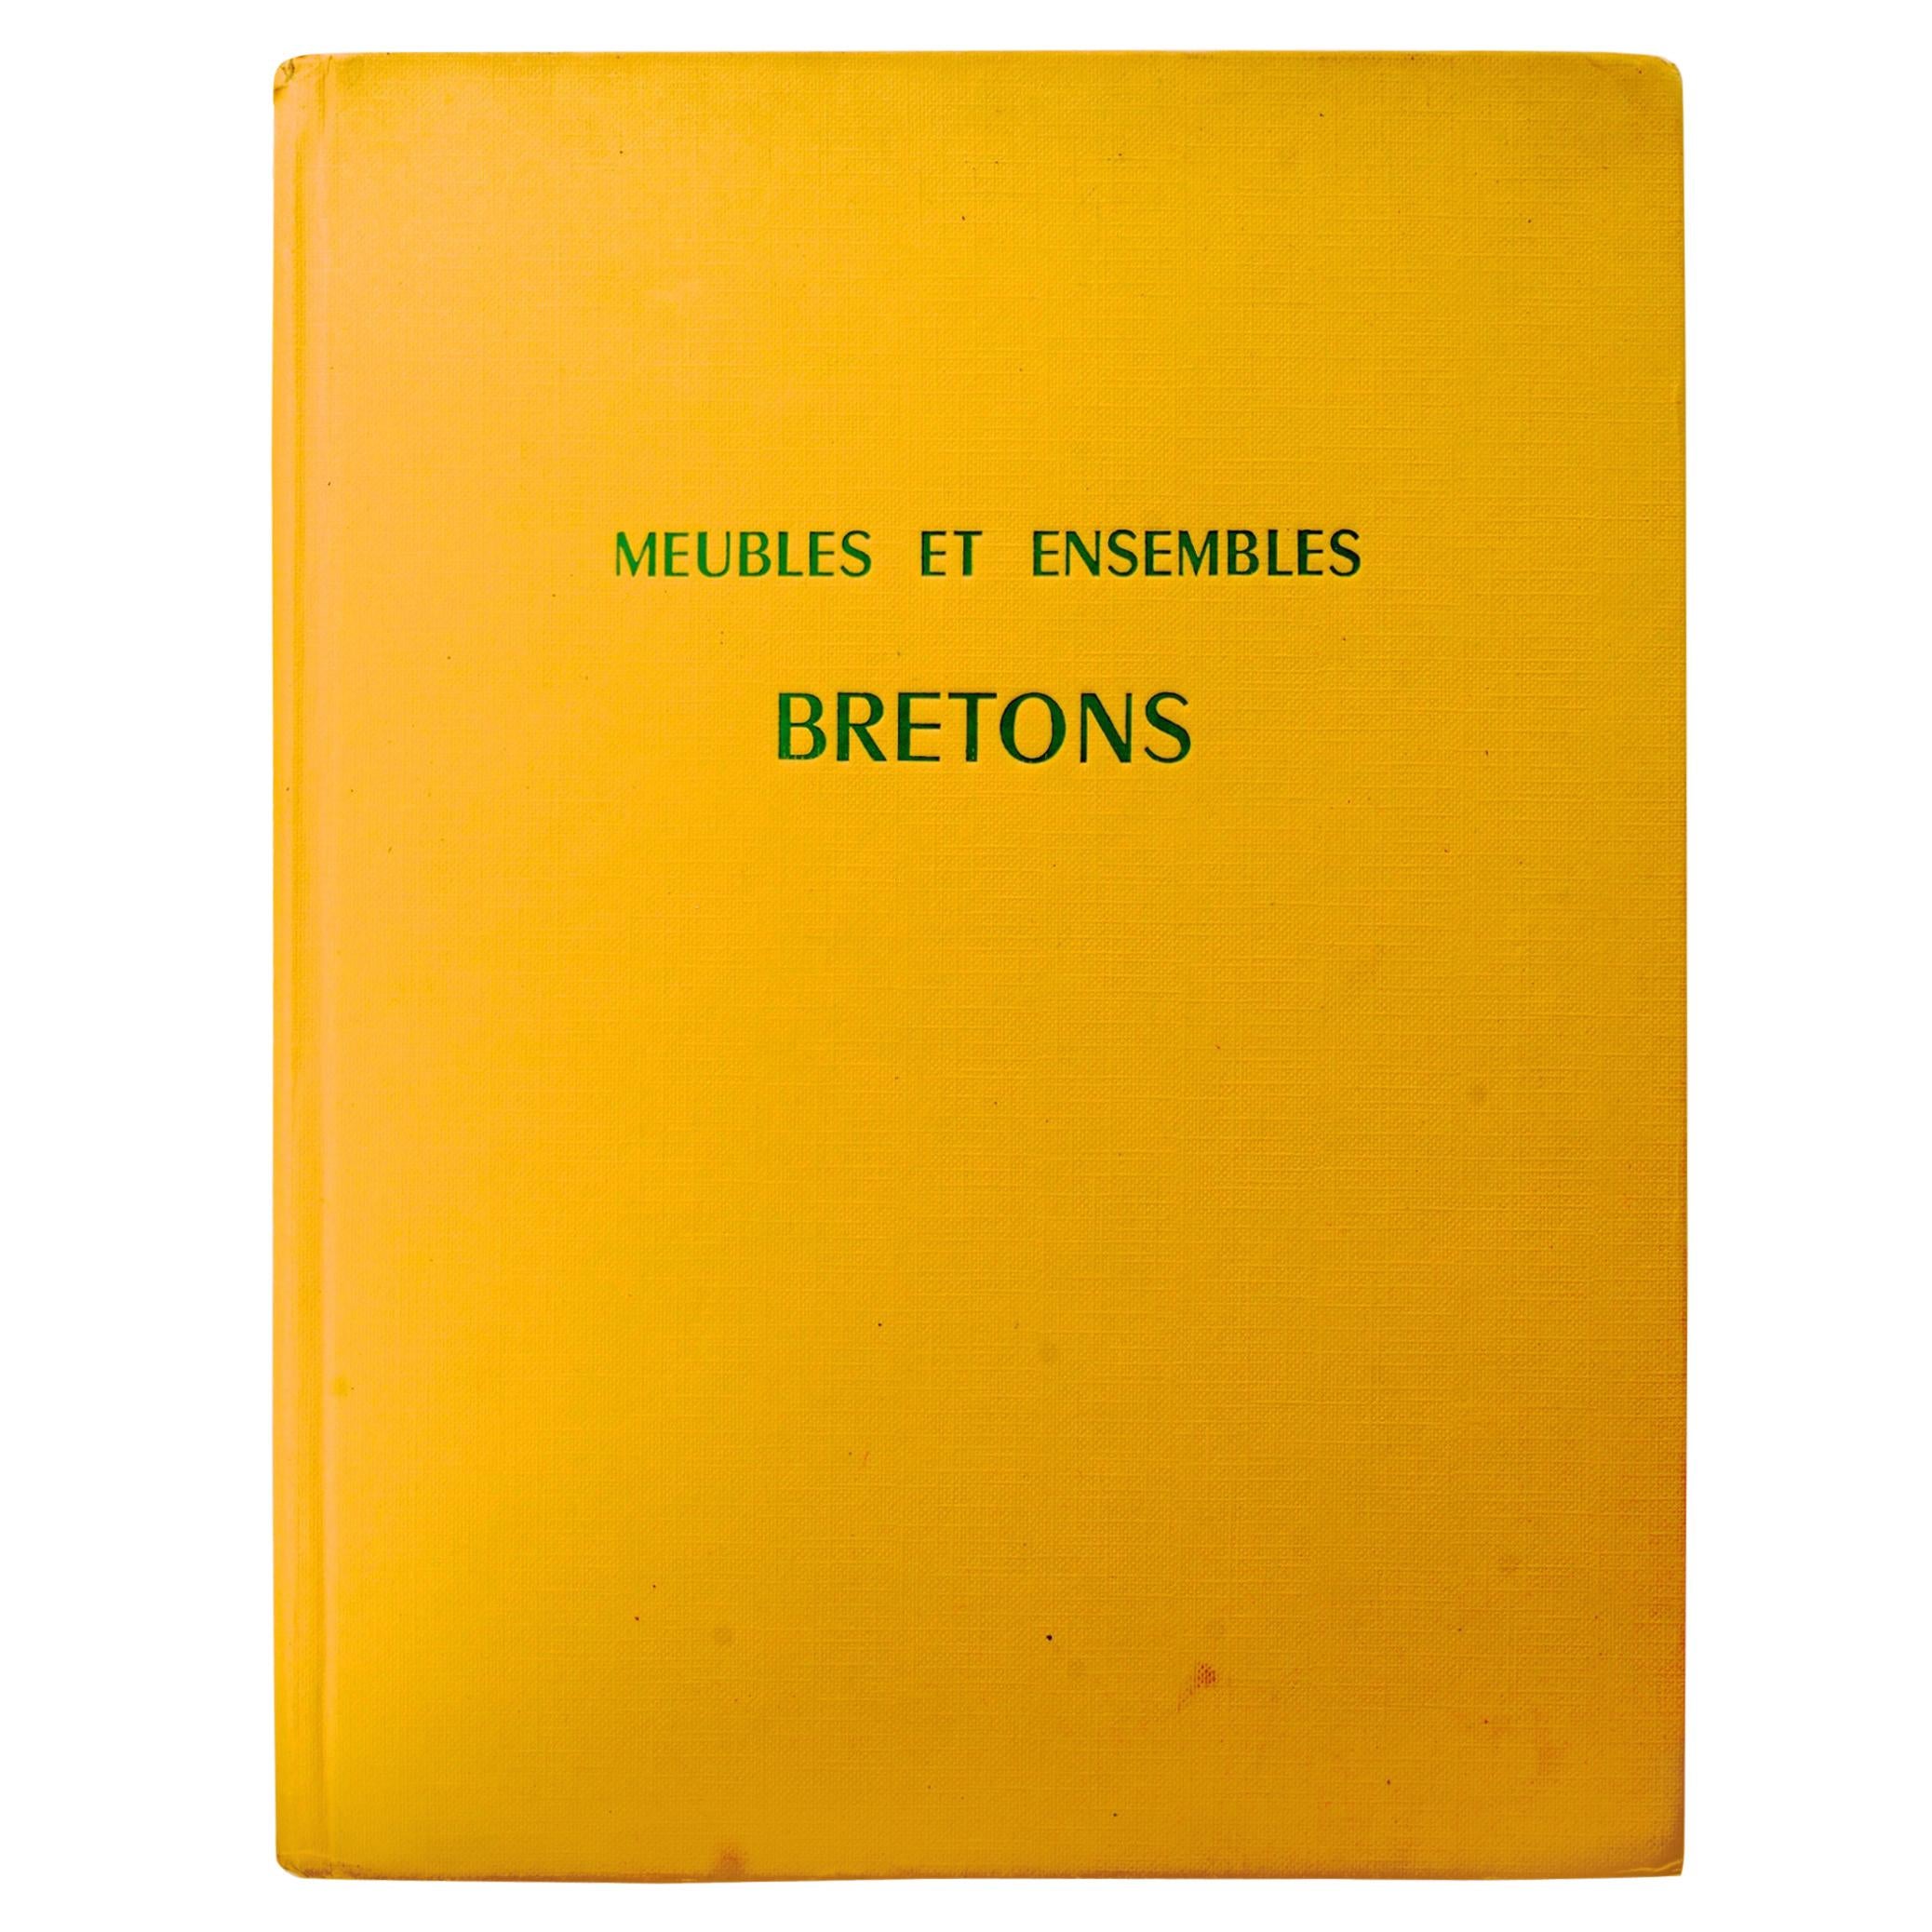 Meubles et Ensembles Bretons von Stany Gauthier, Erstausgabe